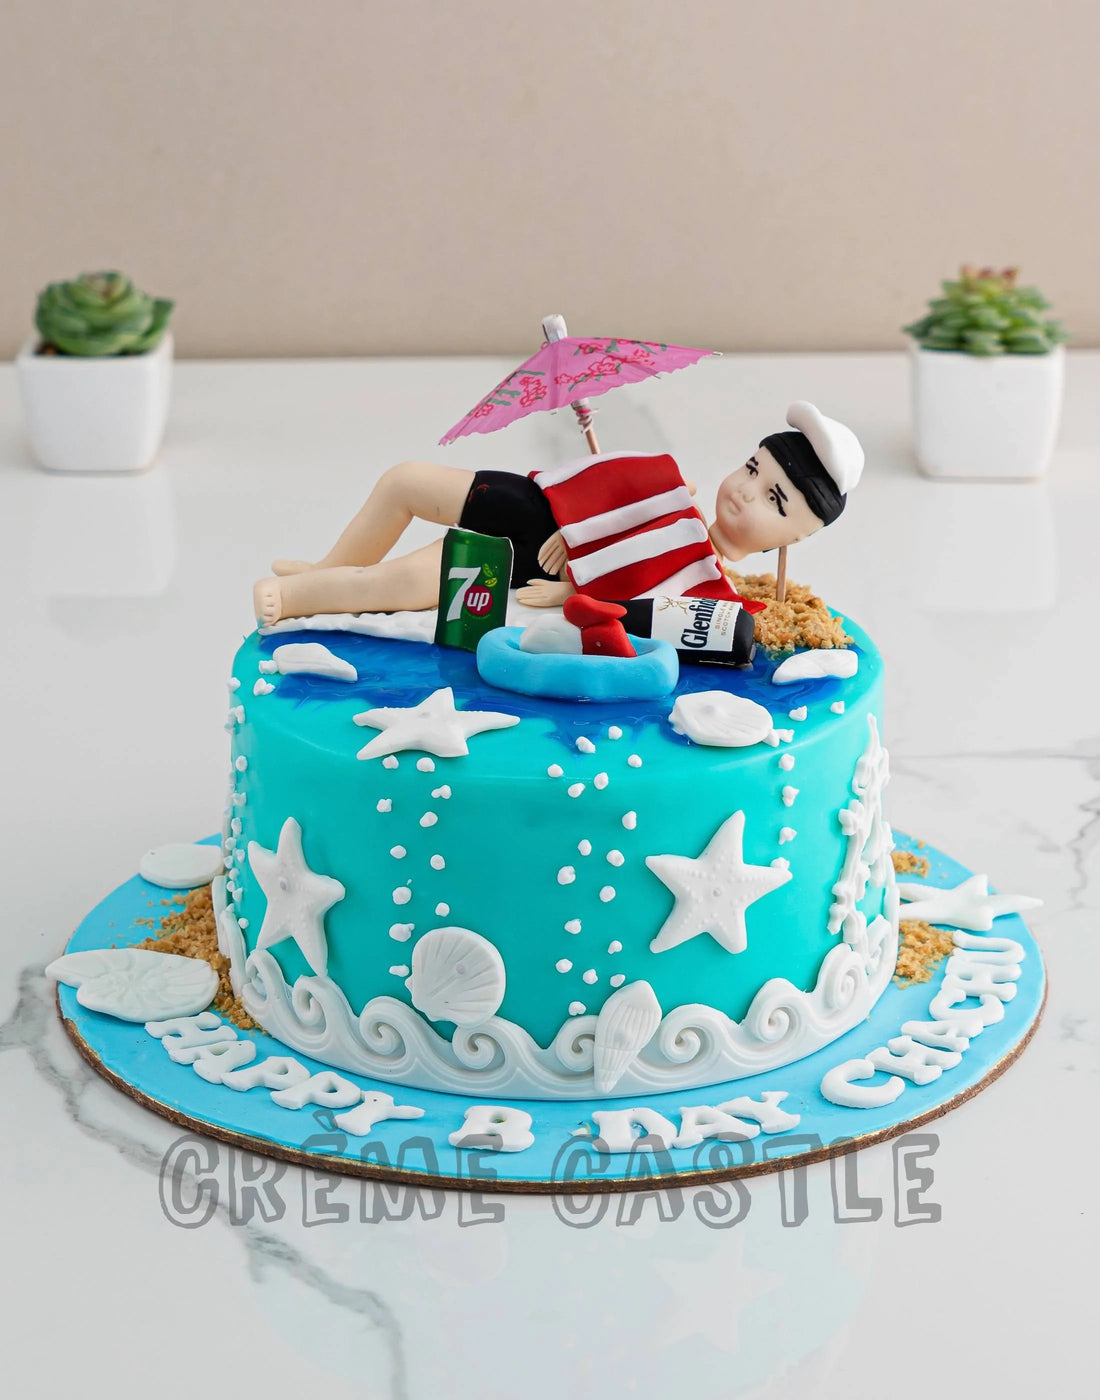 Retirement Theme Cake by Creme Castle